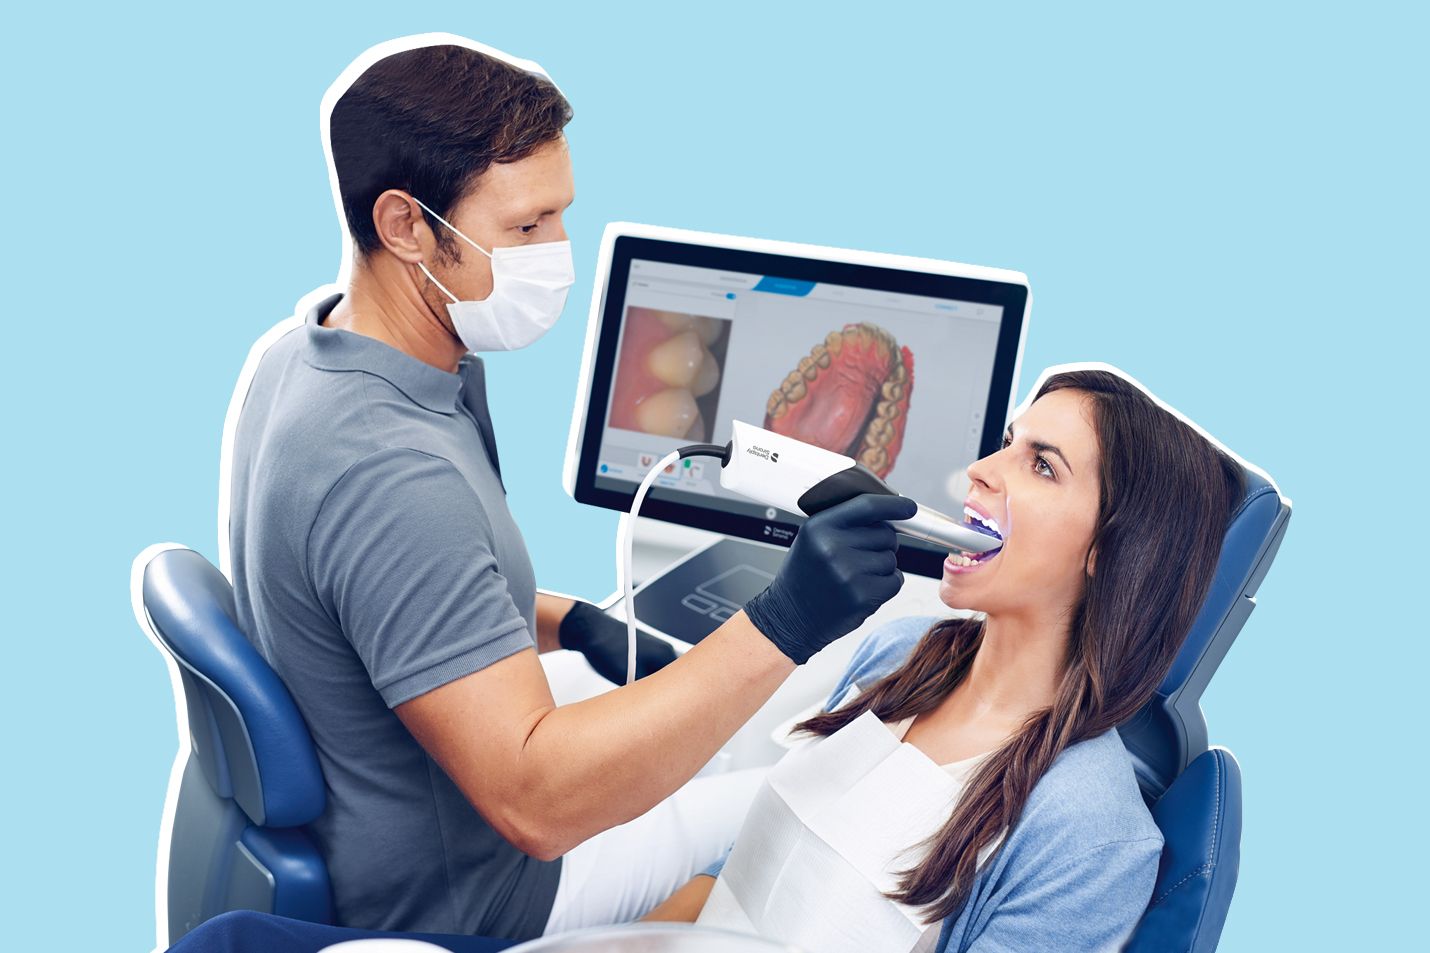 3D scanning to address teeth misalignment